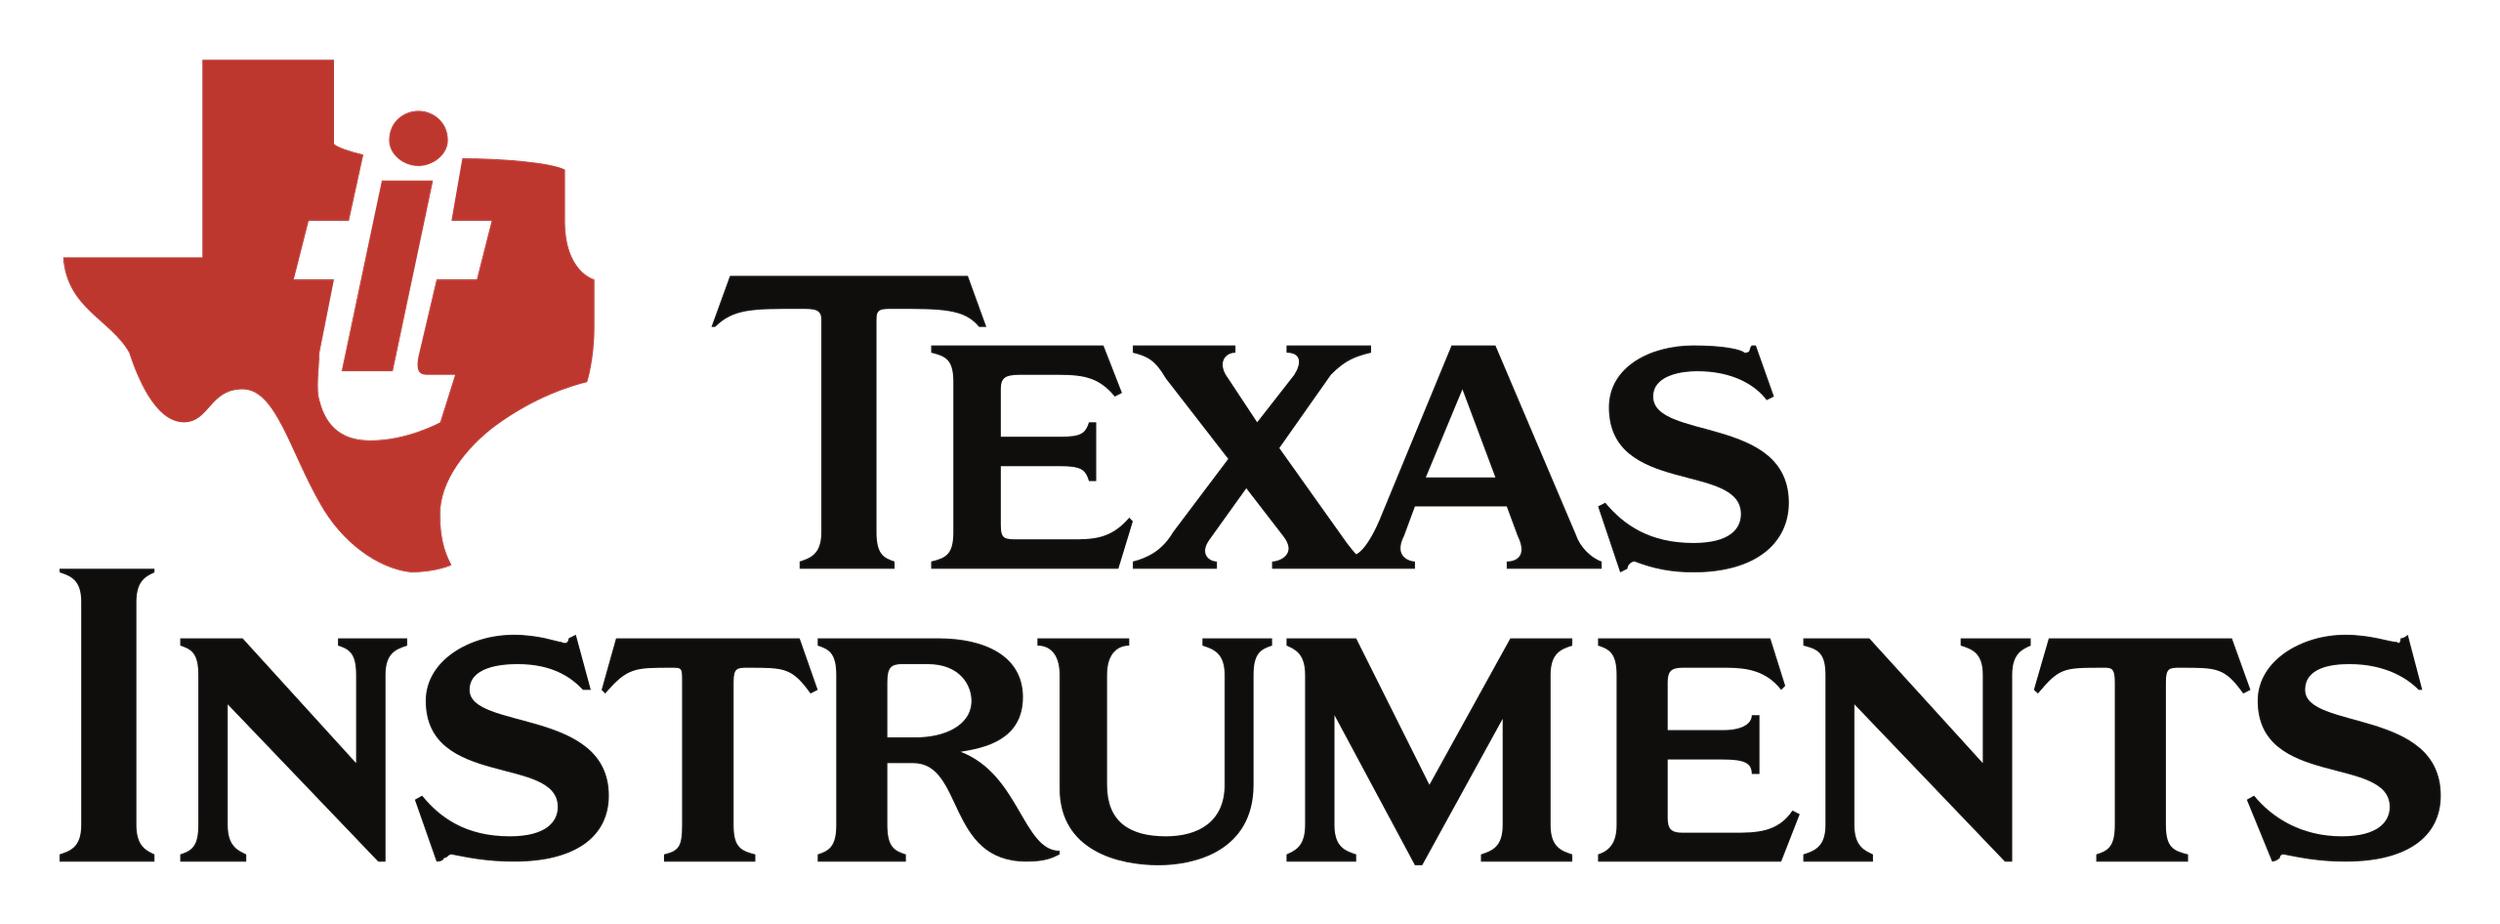 2560px-TexasInstruments-Logo.svg.png